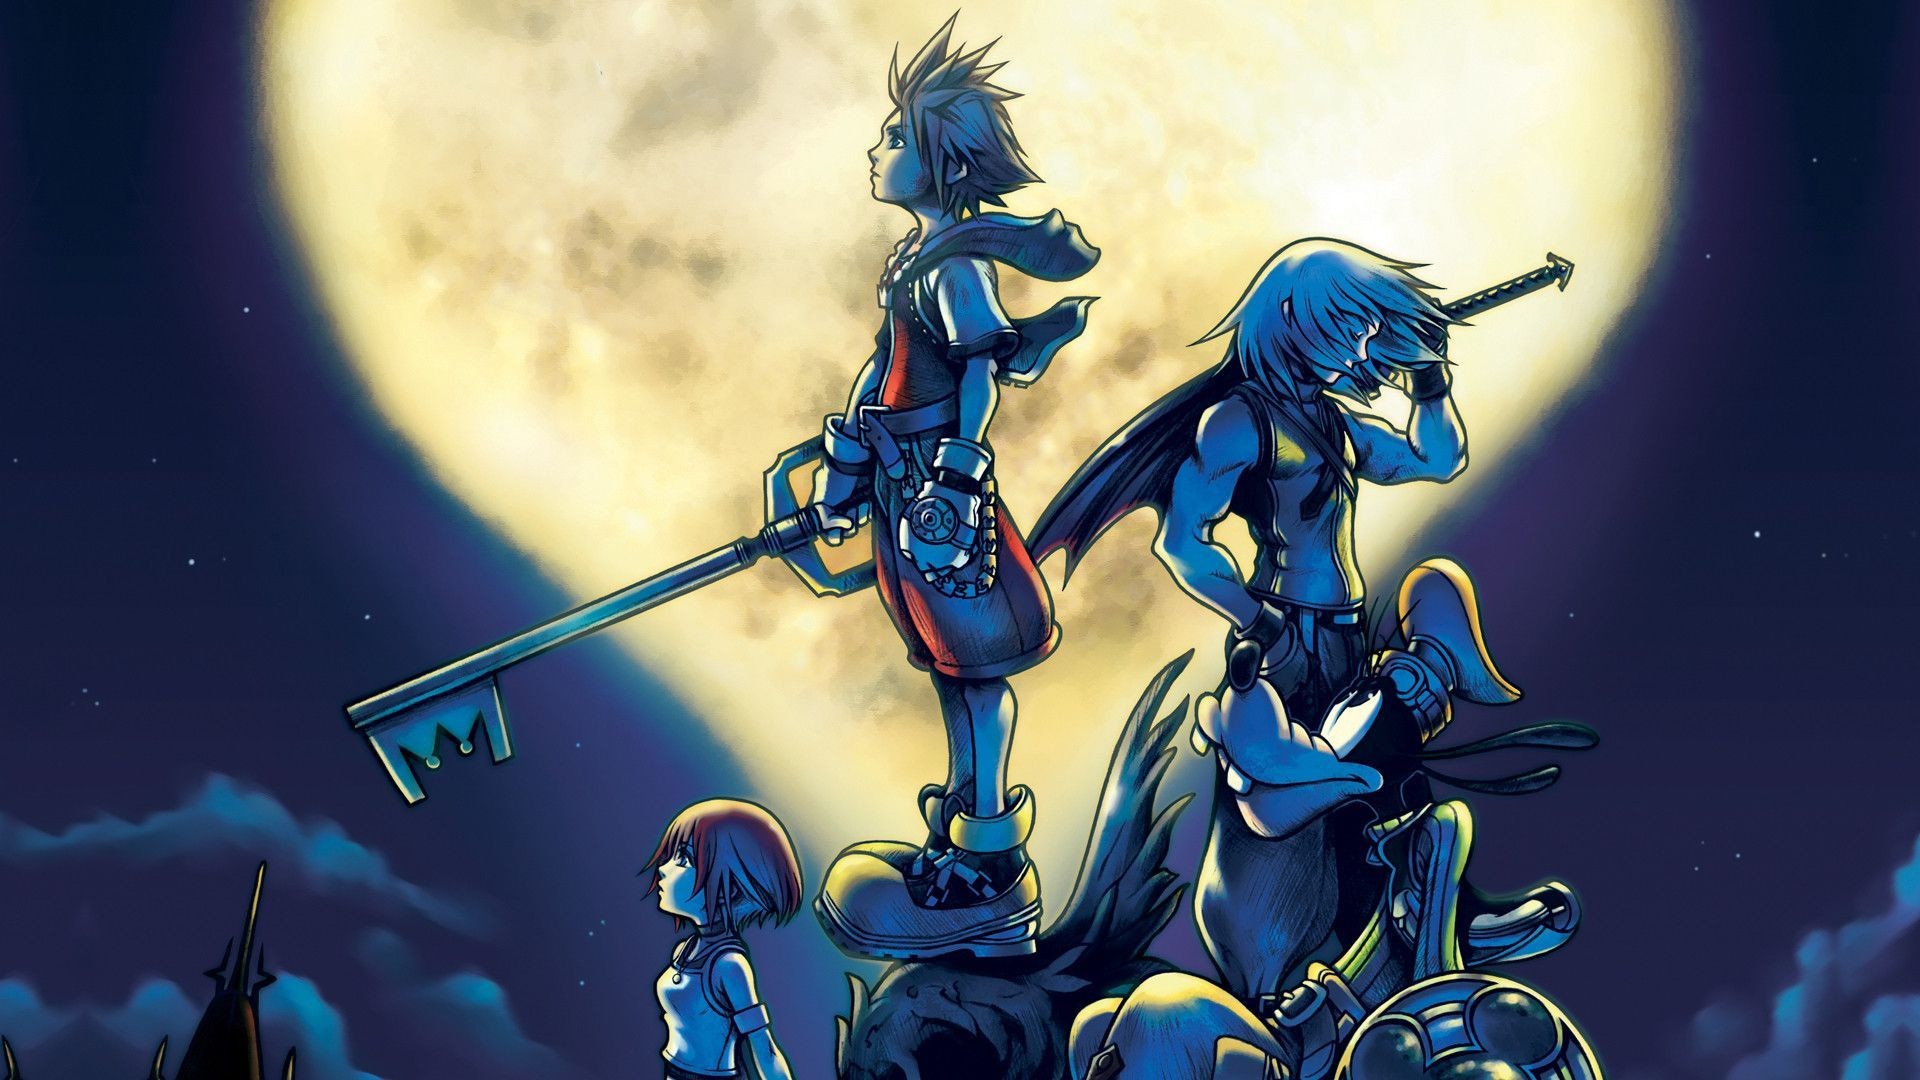 Kingdom Hearts Sora Image 1920x1080